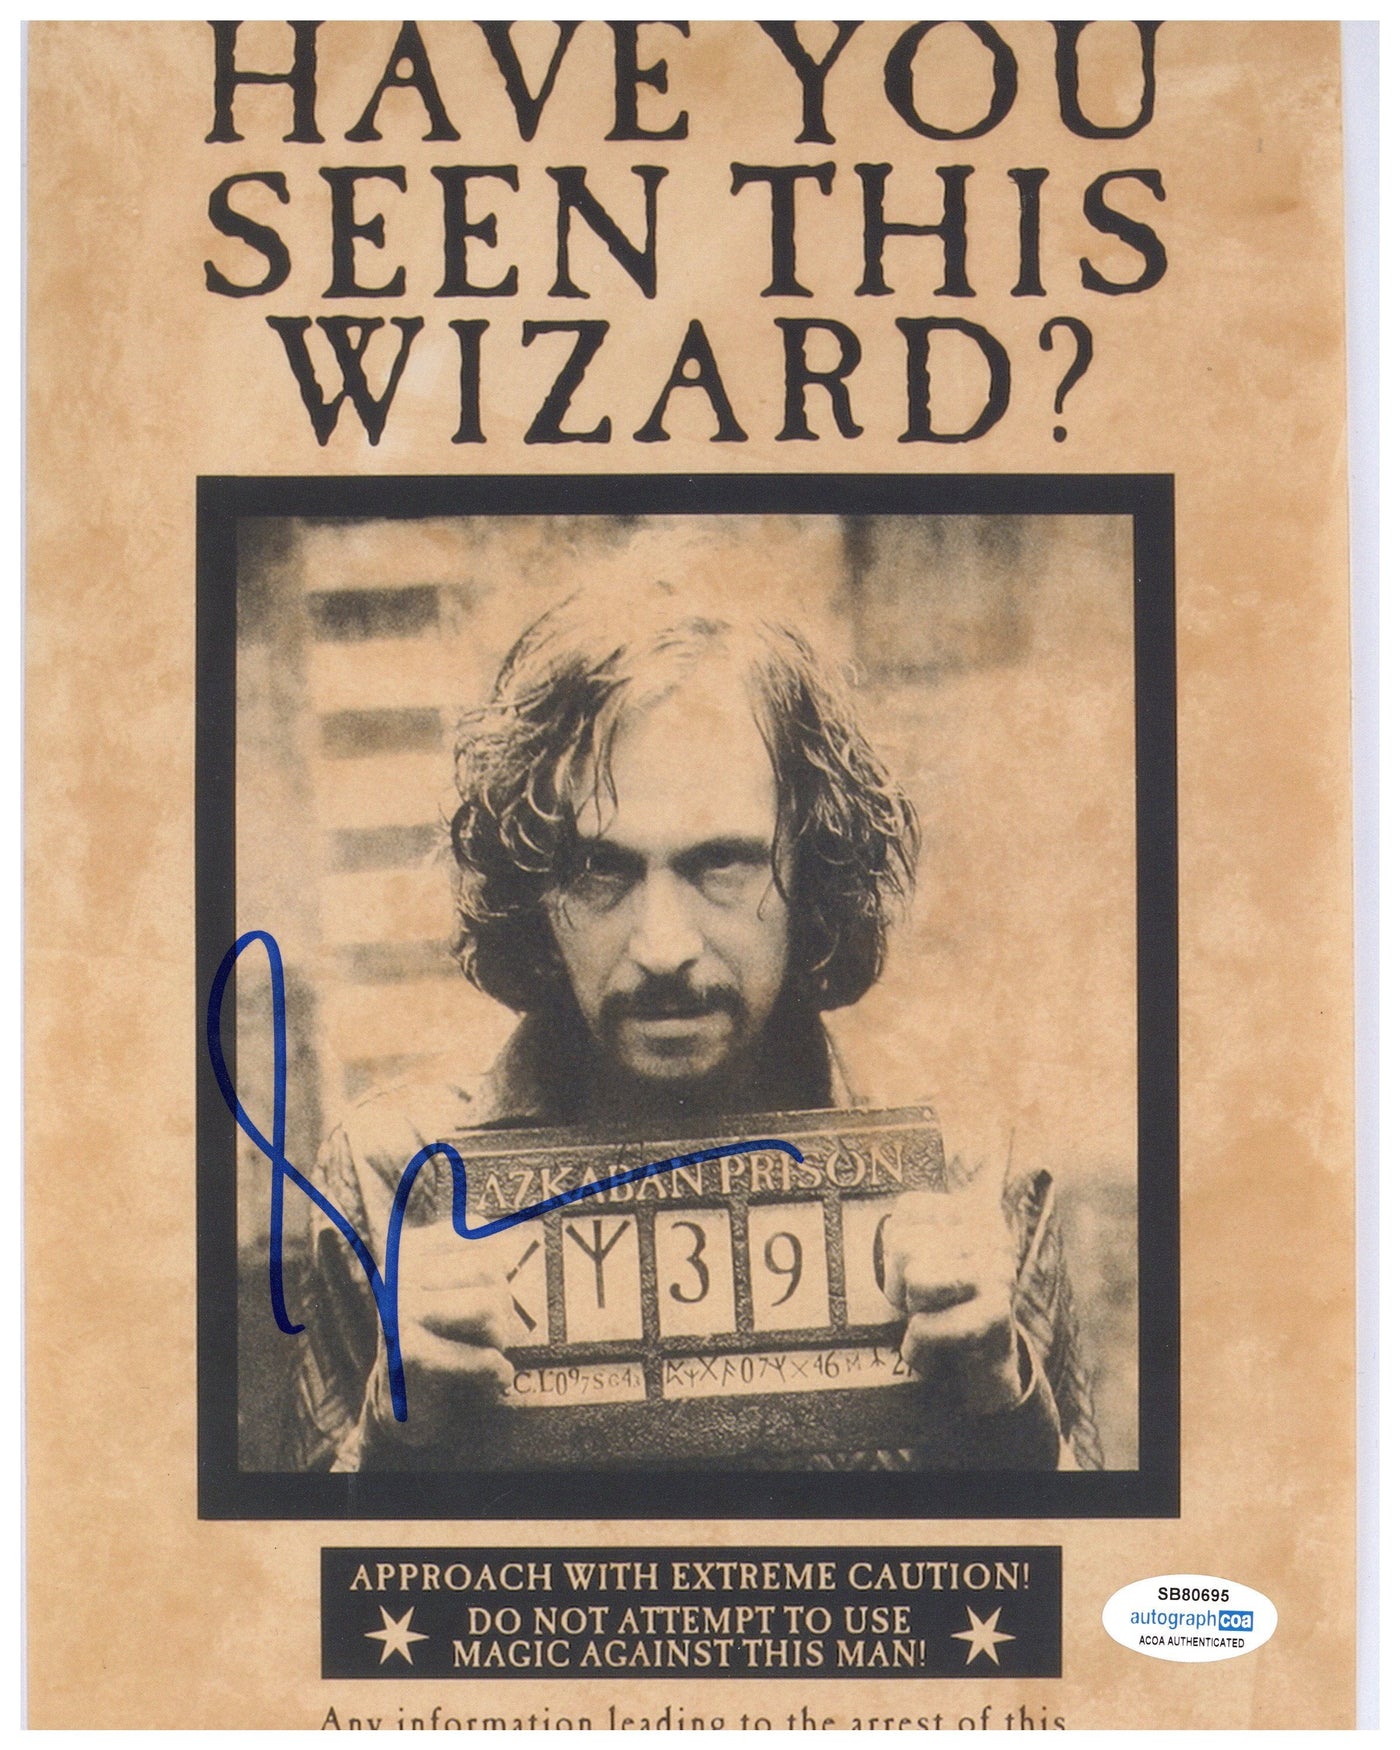 Gary Oldman Signed 8x10 Photo Harry Potter Autographed - AutographCOA